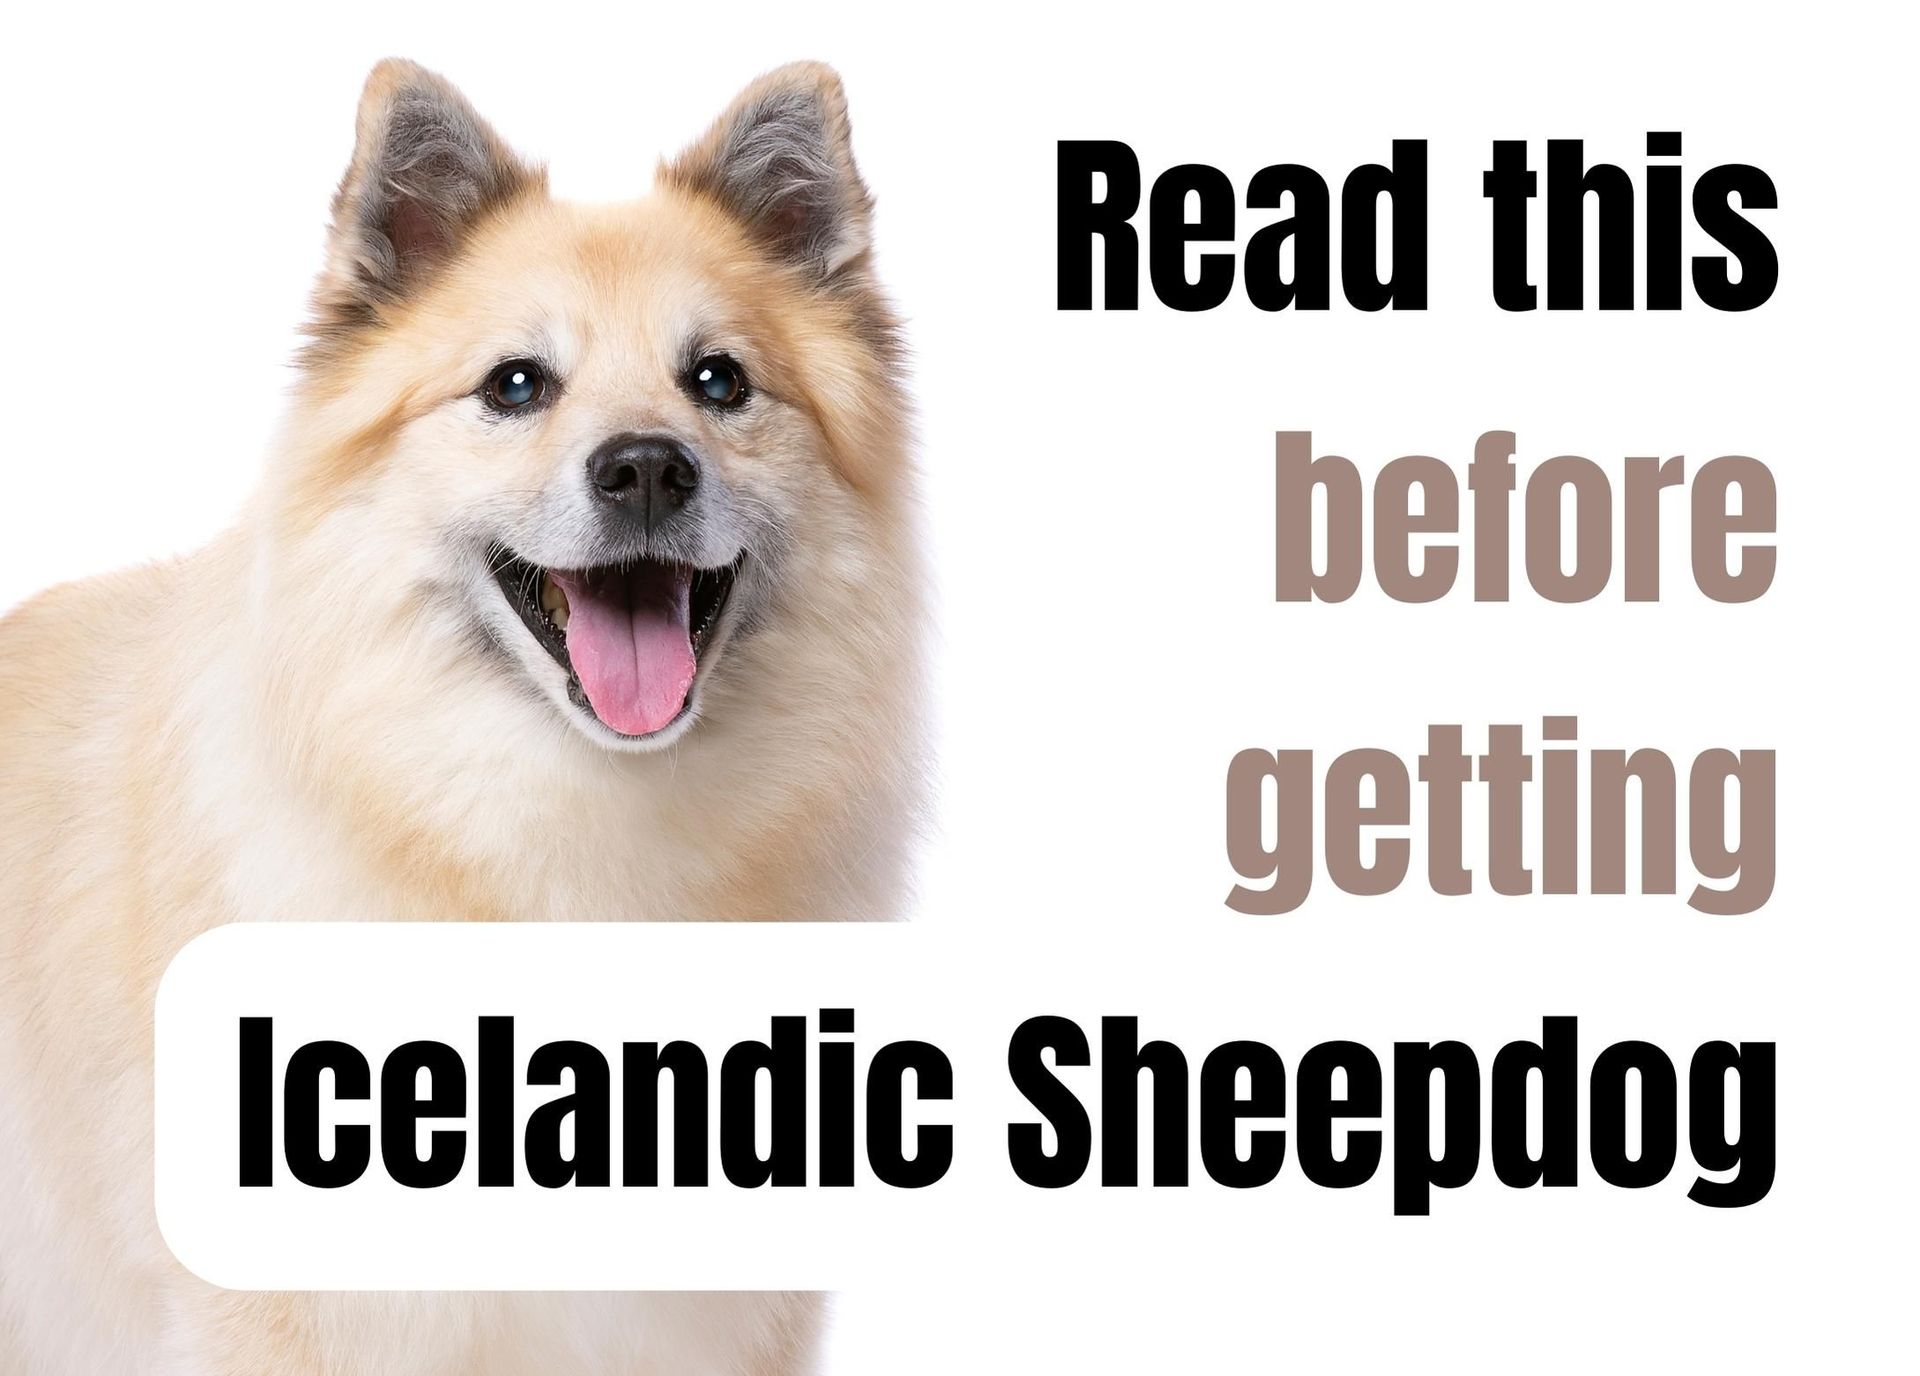 Why Do Icelandic Sheepdogs Bark